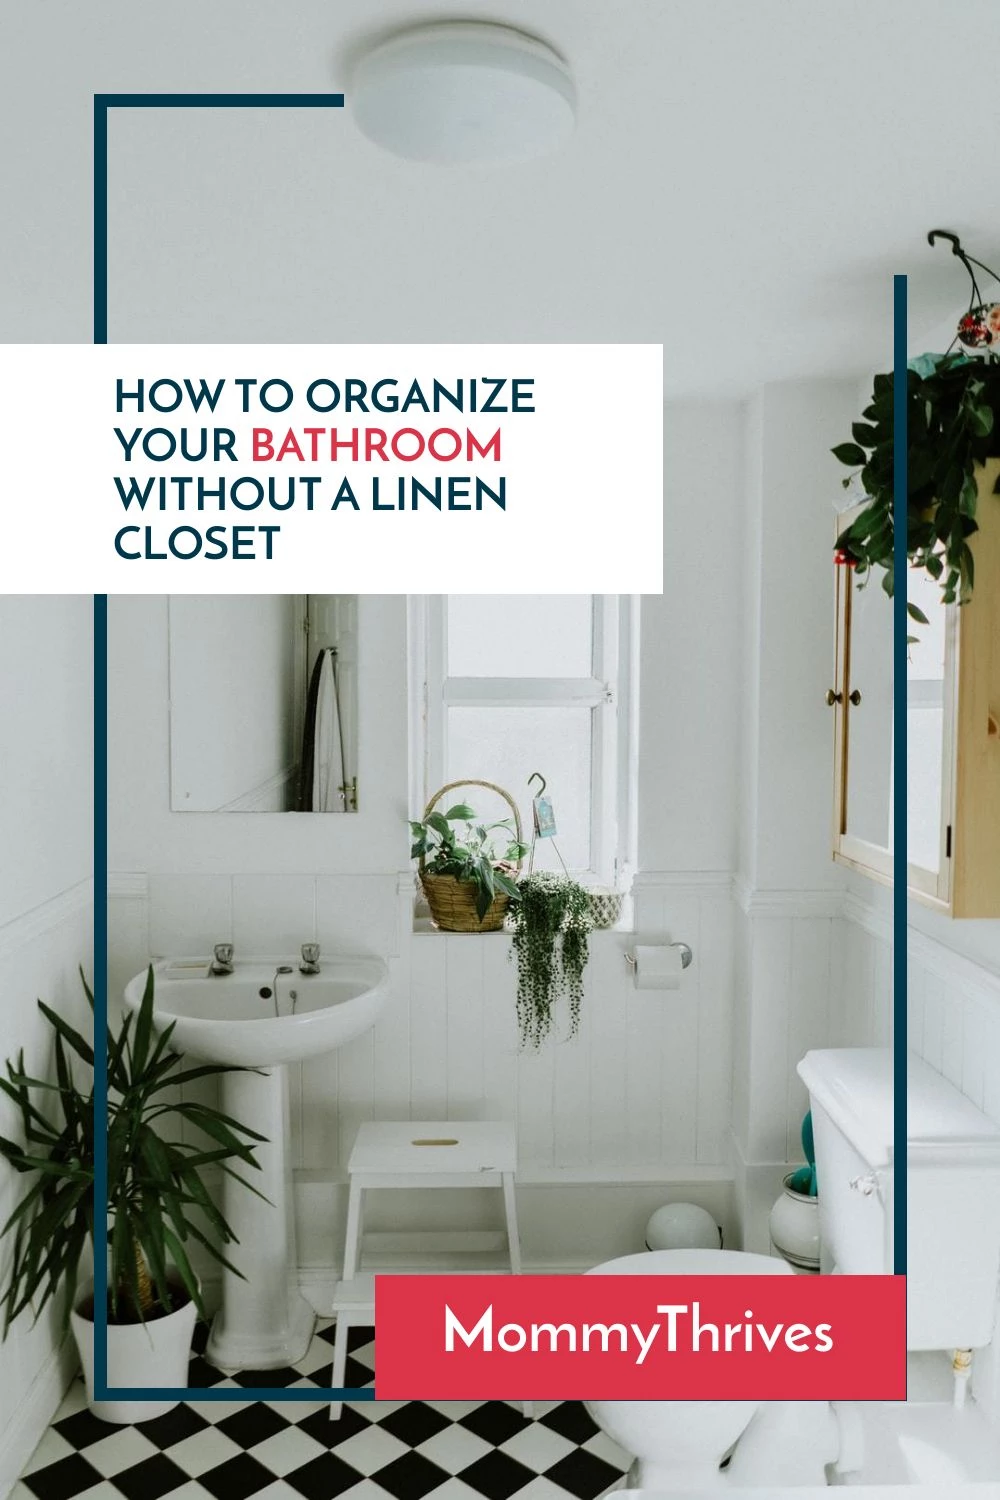 Bathroom Cabinet Organization - Organization Ideas For Small Bathroom - No Linen Closet Bathroom Organization Ideas